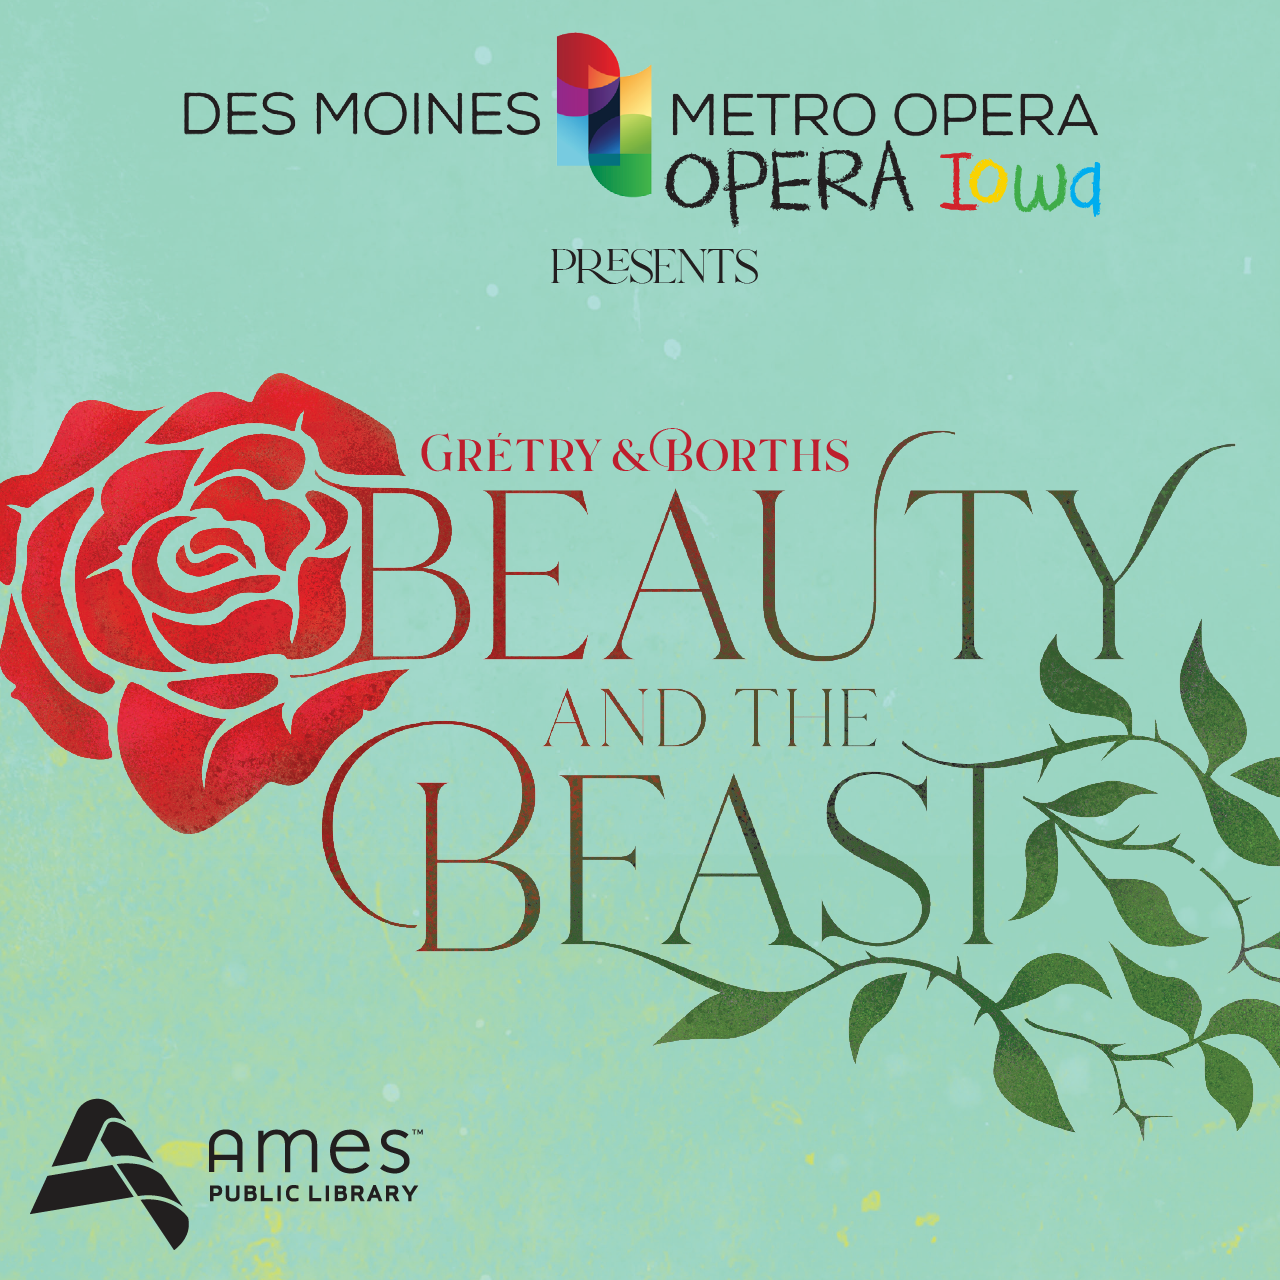 Des Moines Metro Opera/Opera Iowa presents Gretry & Borths Beauty and the Beast